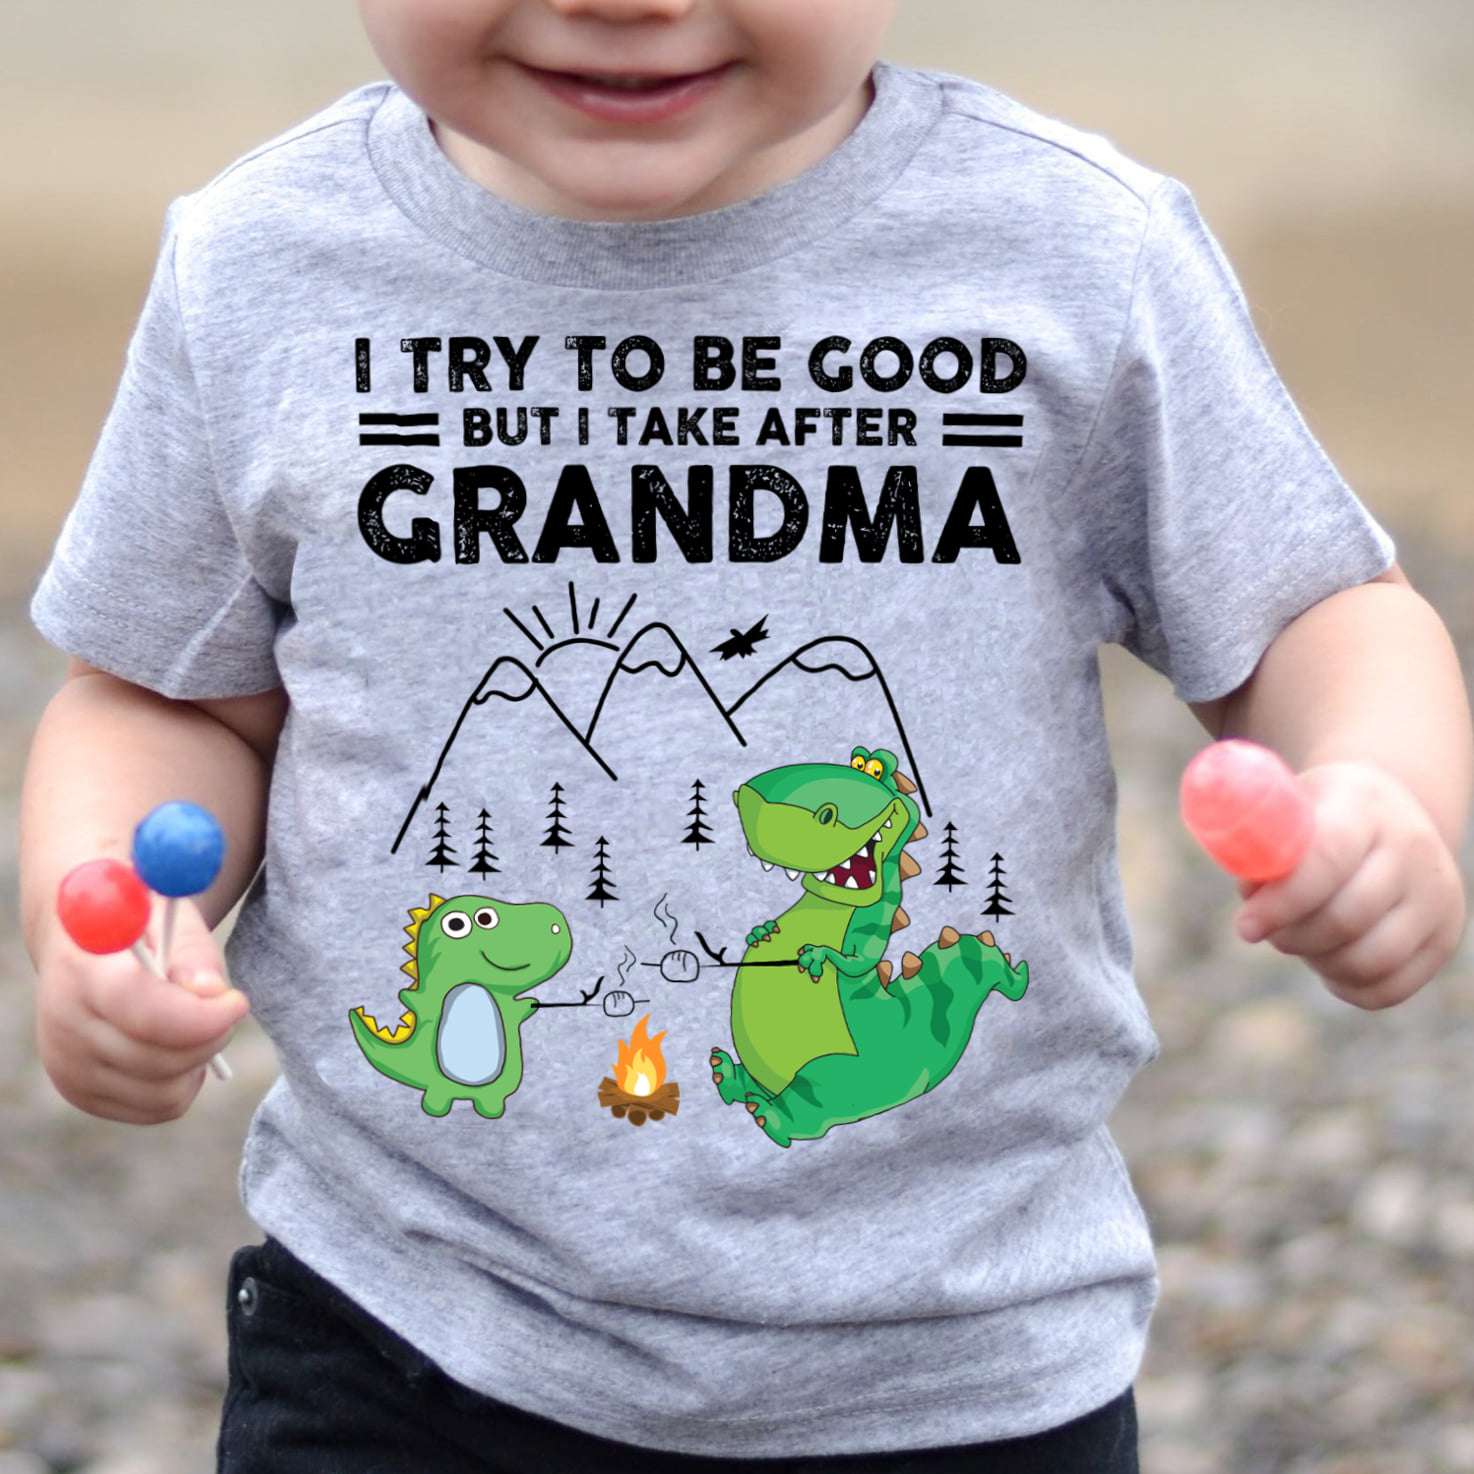 I try to be good but I take after grandma - Grandma dinosaur, grandma and grandchildren